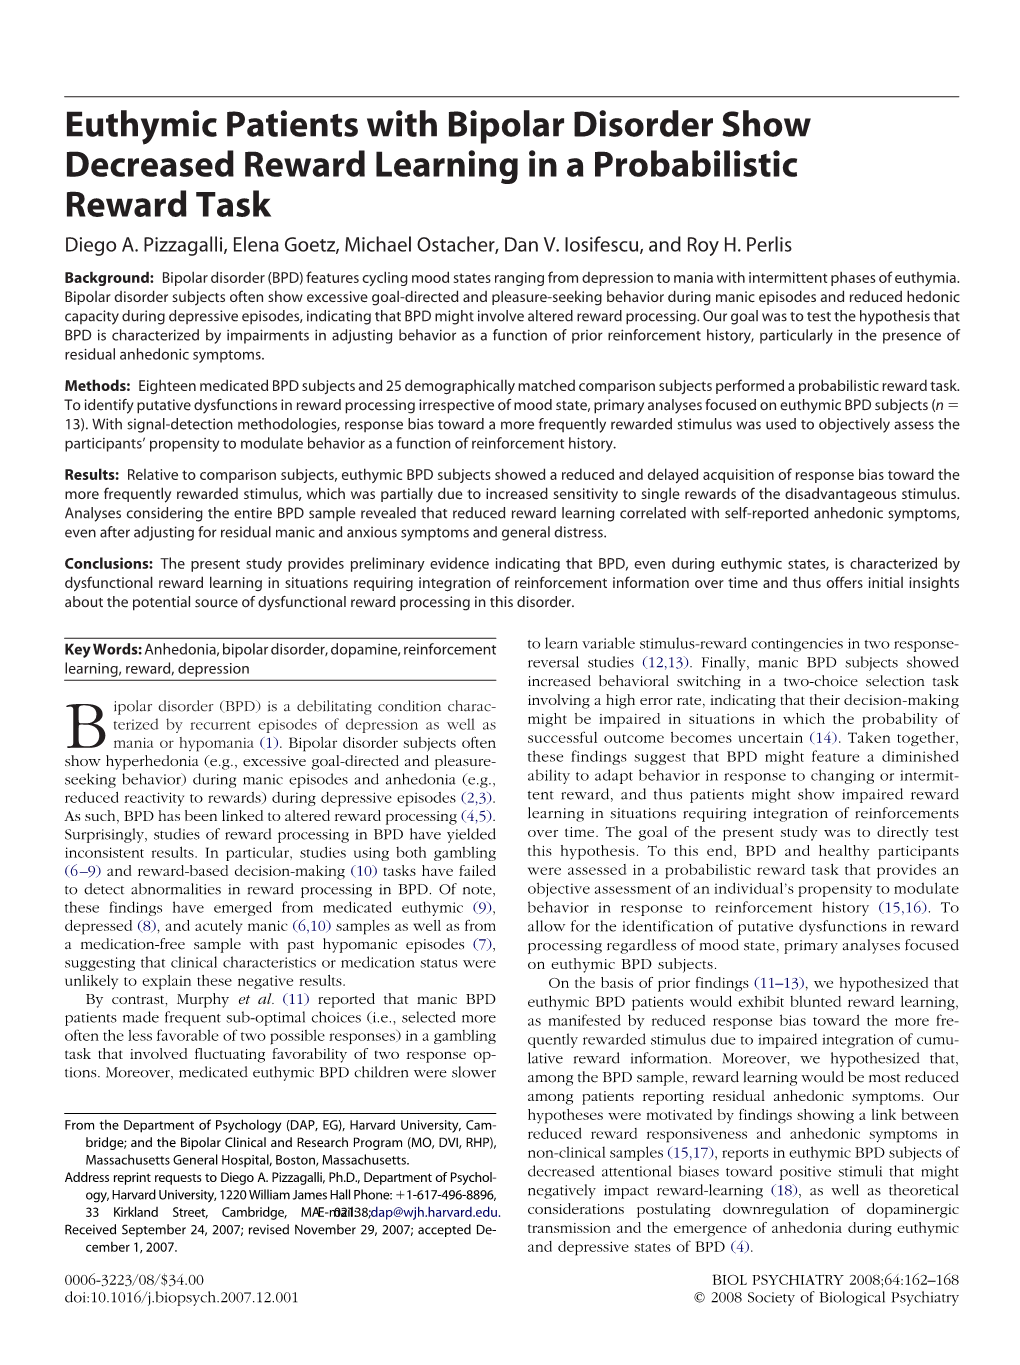 Euthymic Patients with Bipolar Disorder Show Decreased Reward Learning in a Probabilistic Reward Task Diego A